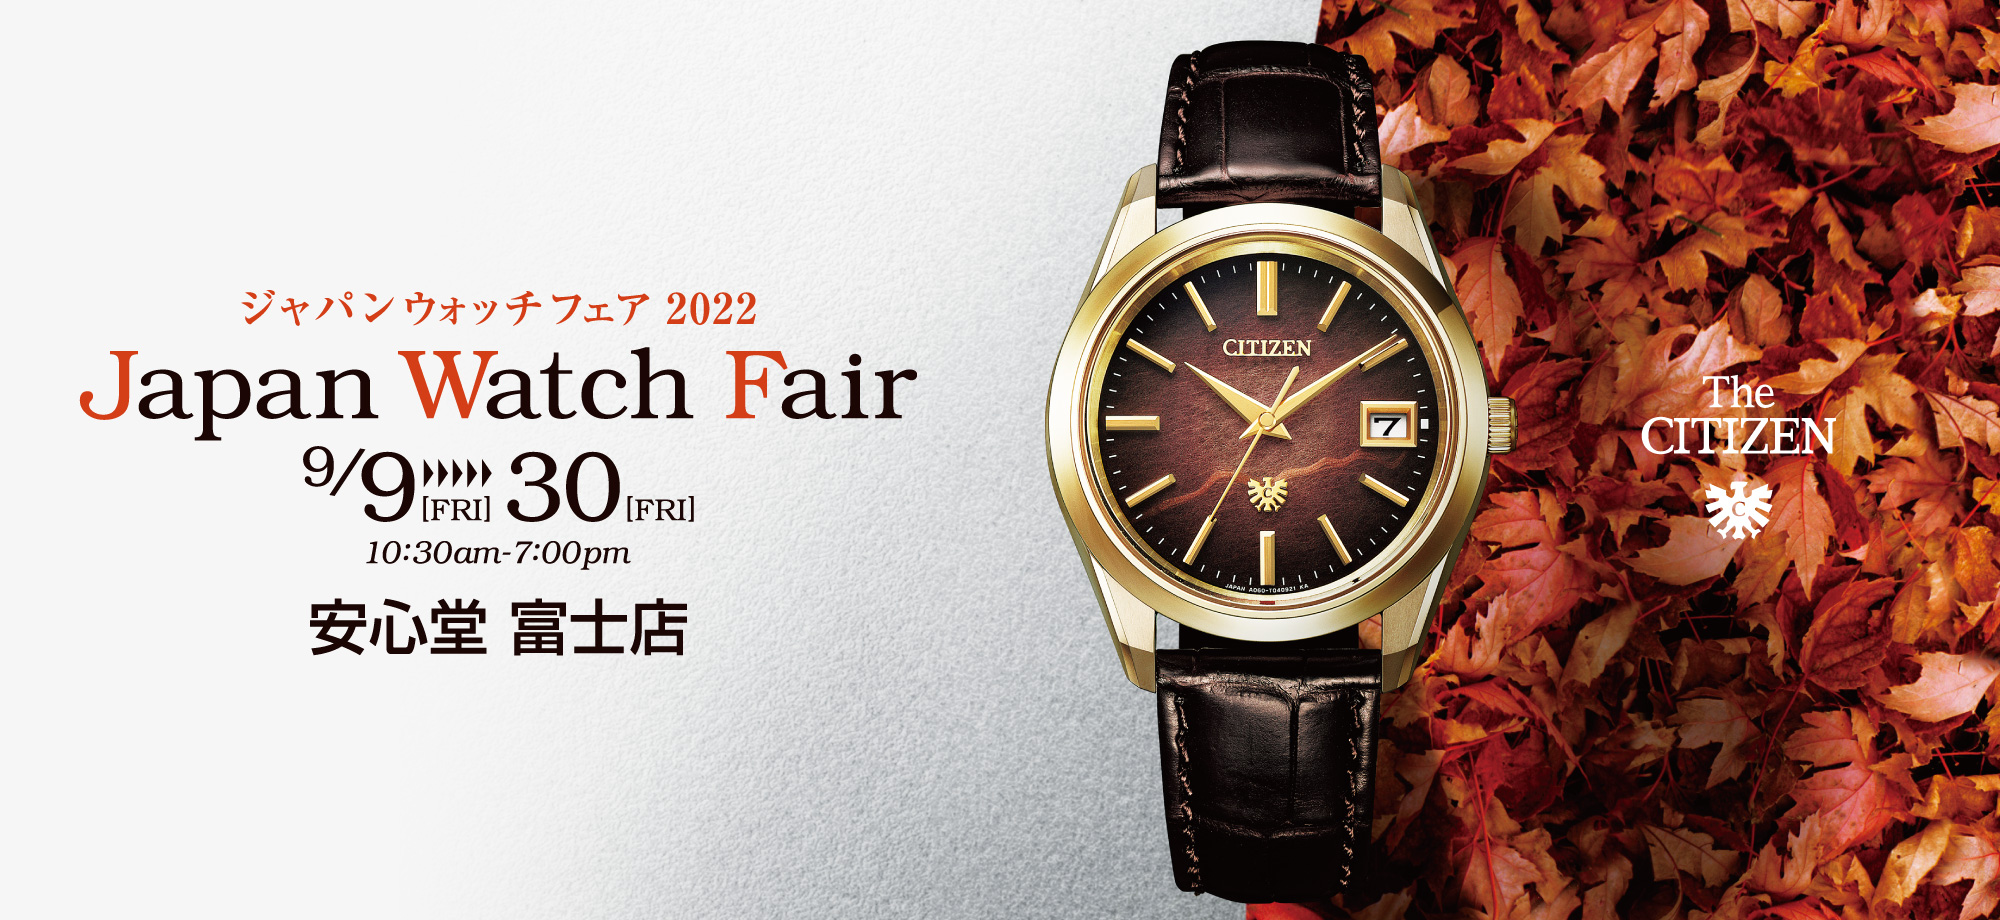 ○o。Japan Watch Fair　2022.9.9（Fri.）-9.30(Fri.)。o○